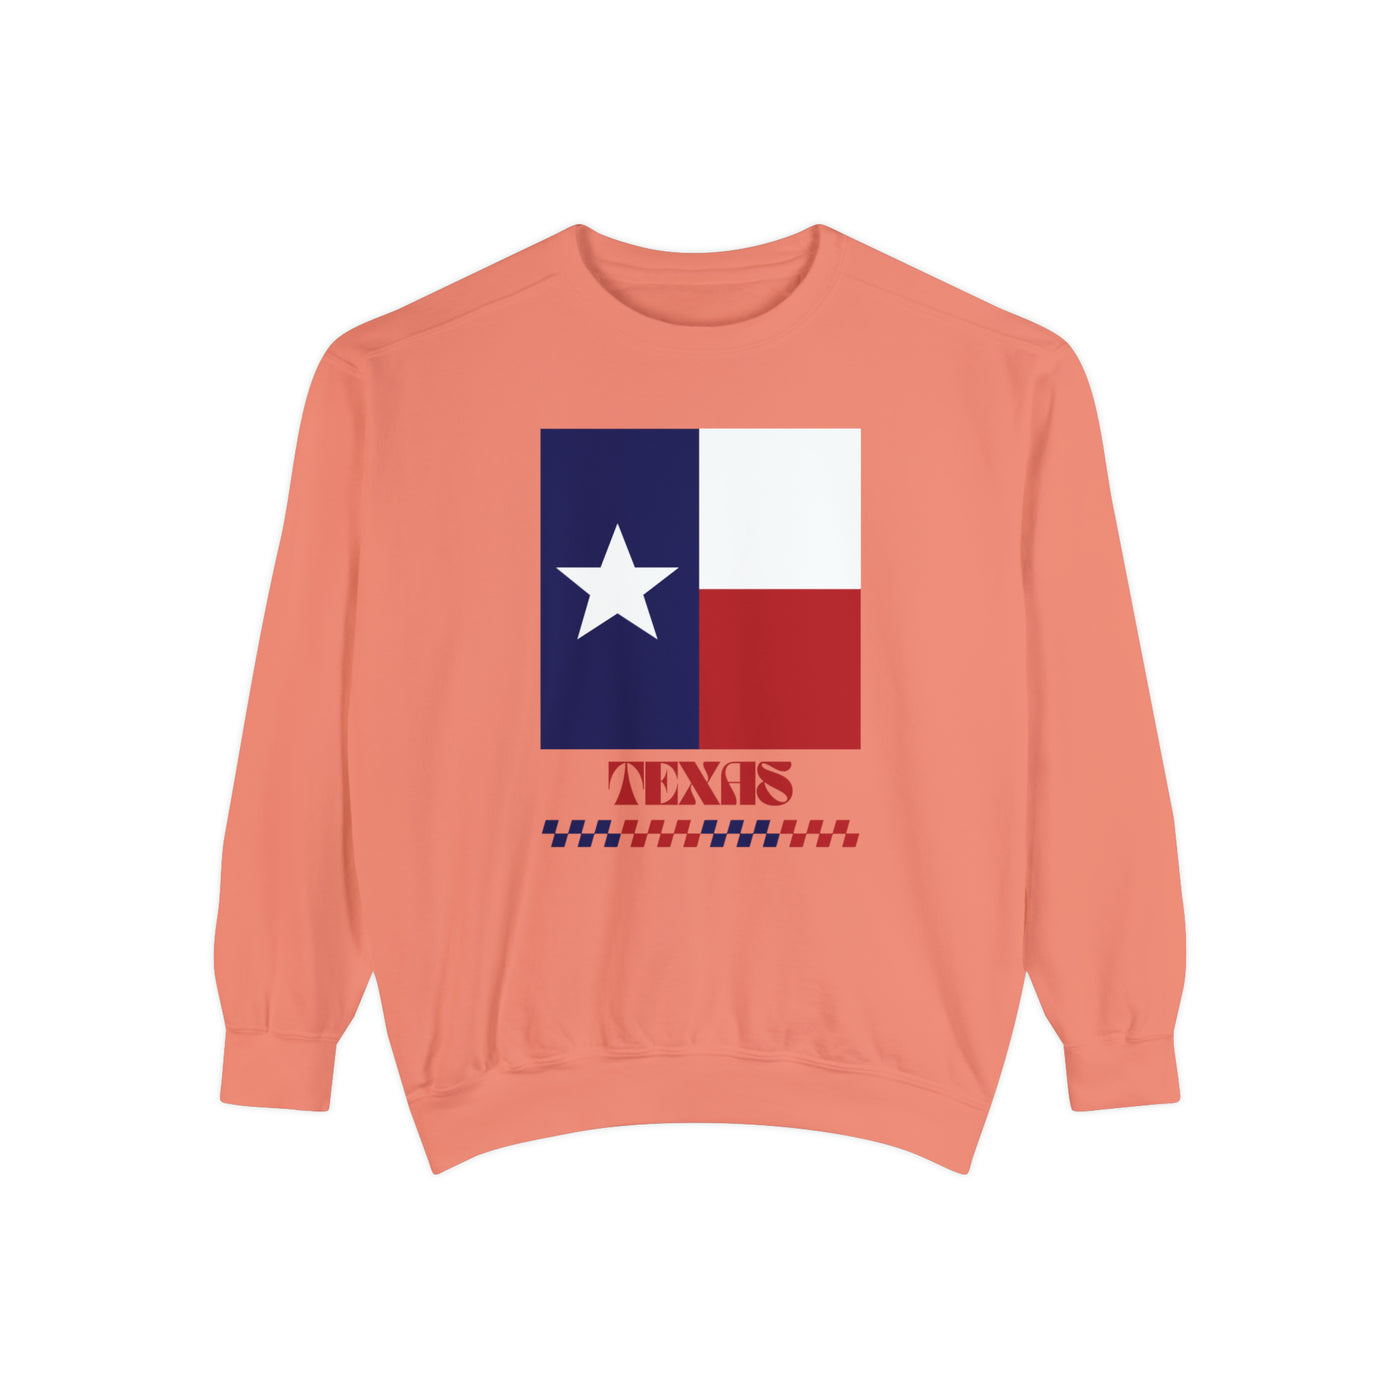 Texas Retro Sweatshirt